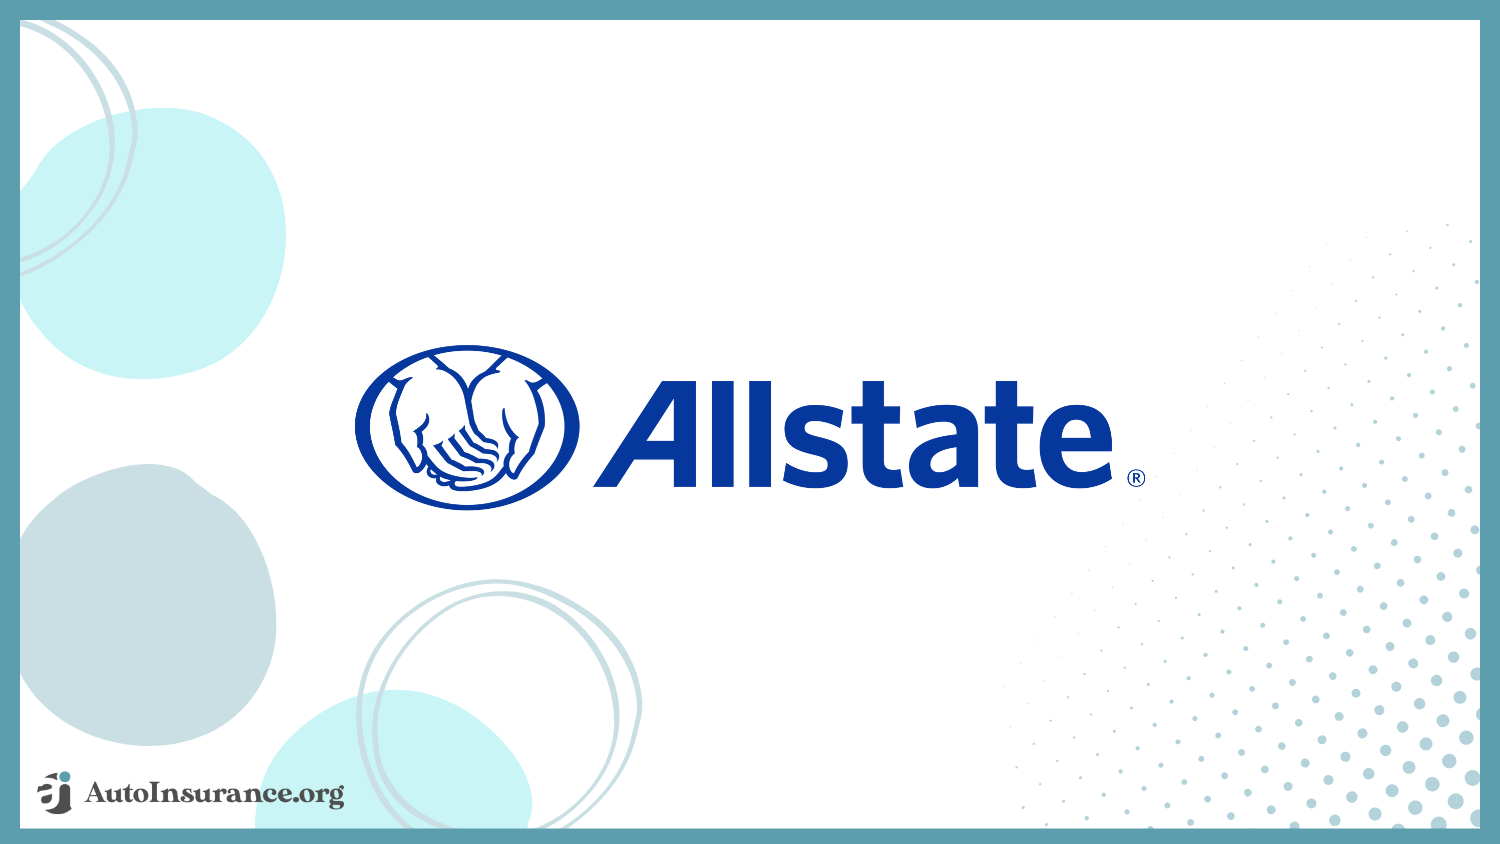 allstate: Best Auto Insurance for Hybrid Vehicles